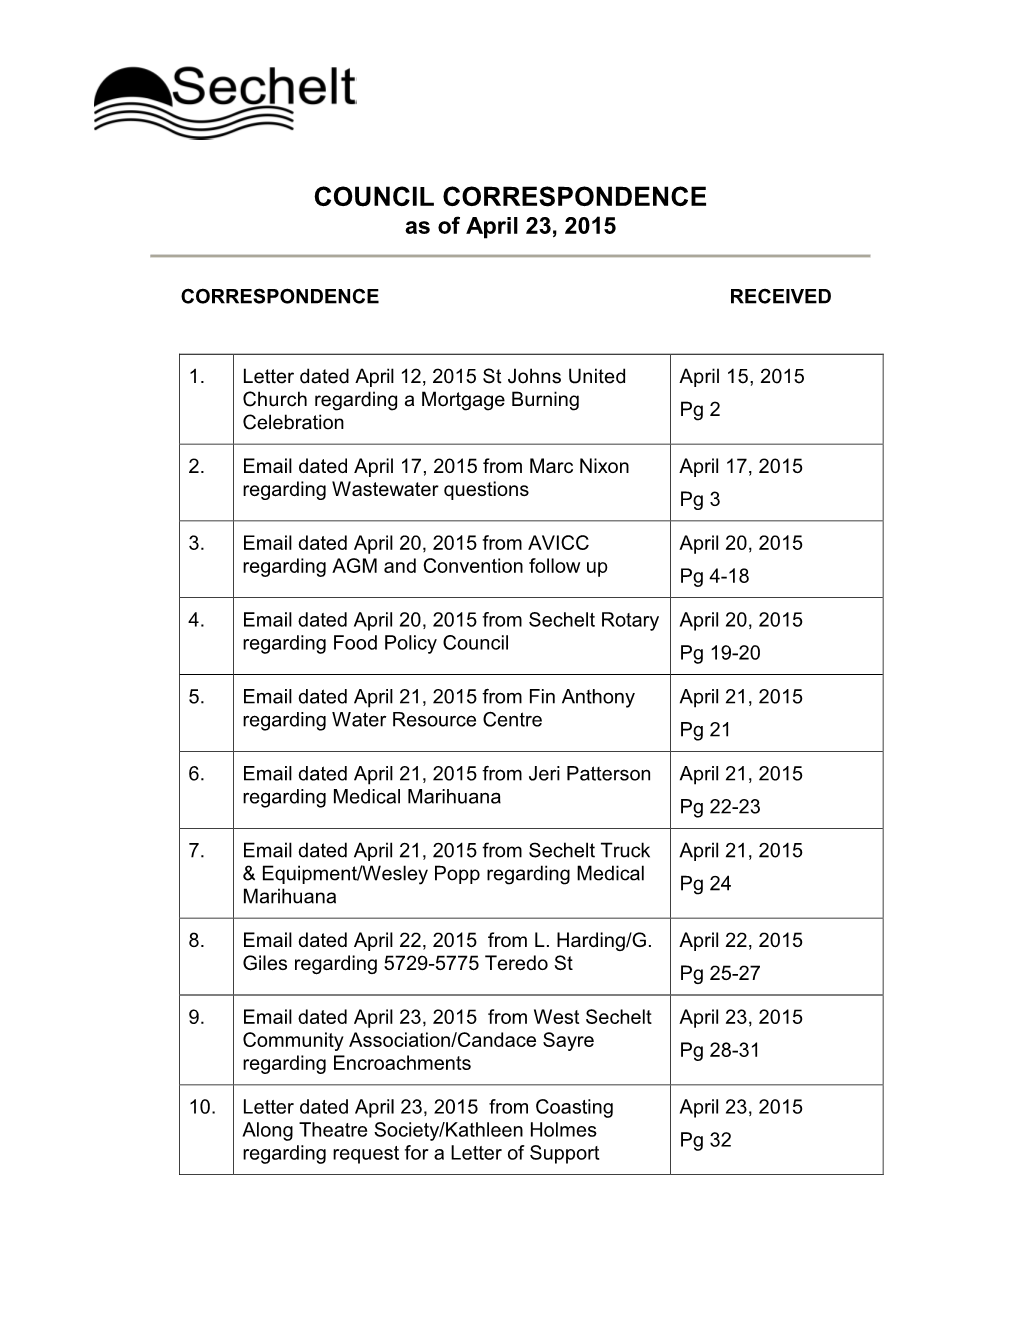 COUNCIL CORRESPONDENCE As of April 23, 2015